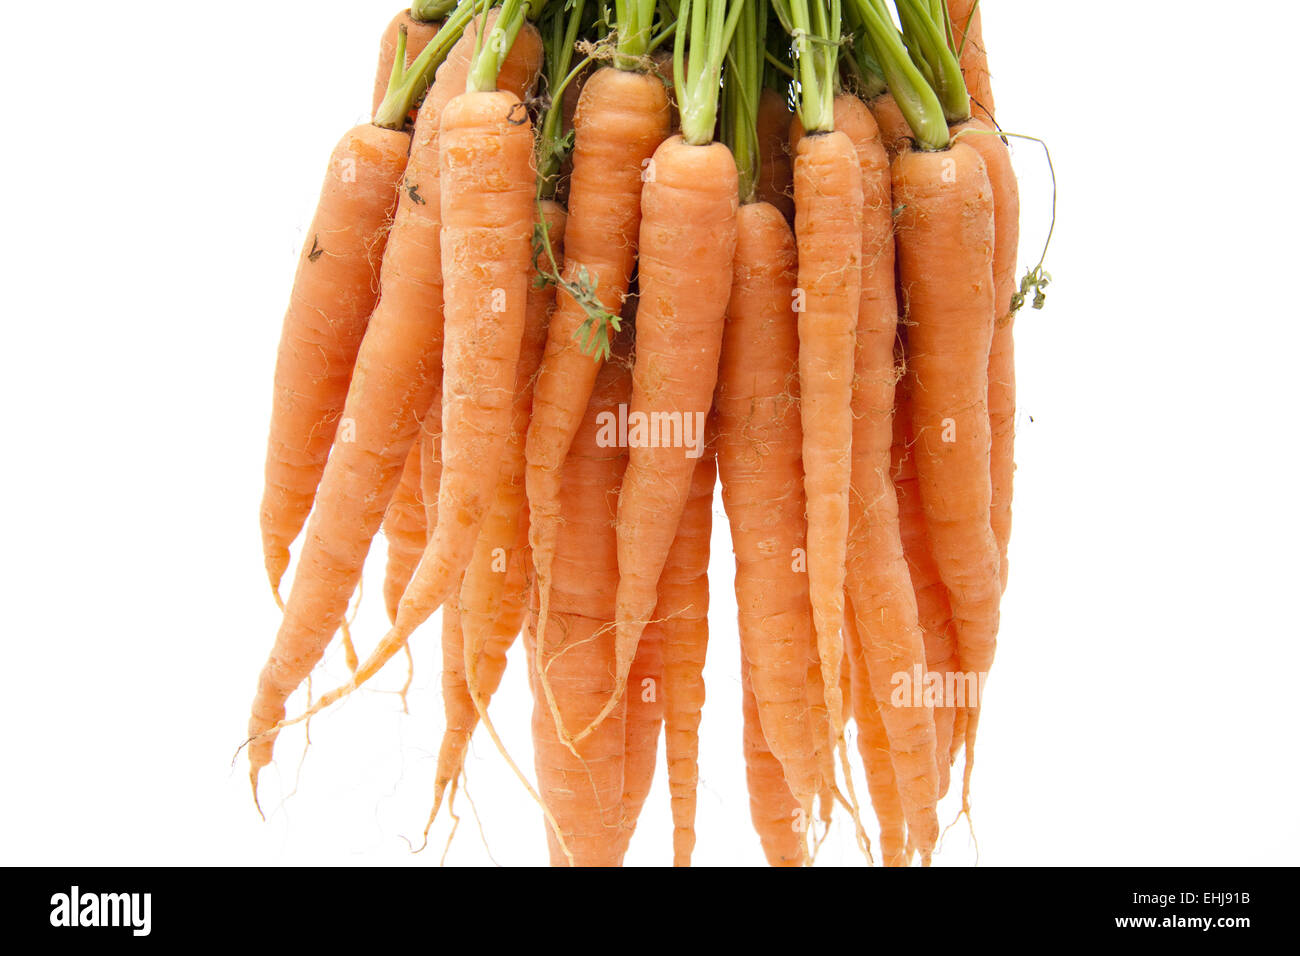 Carrots hanging Stock Photo